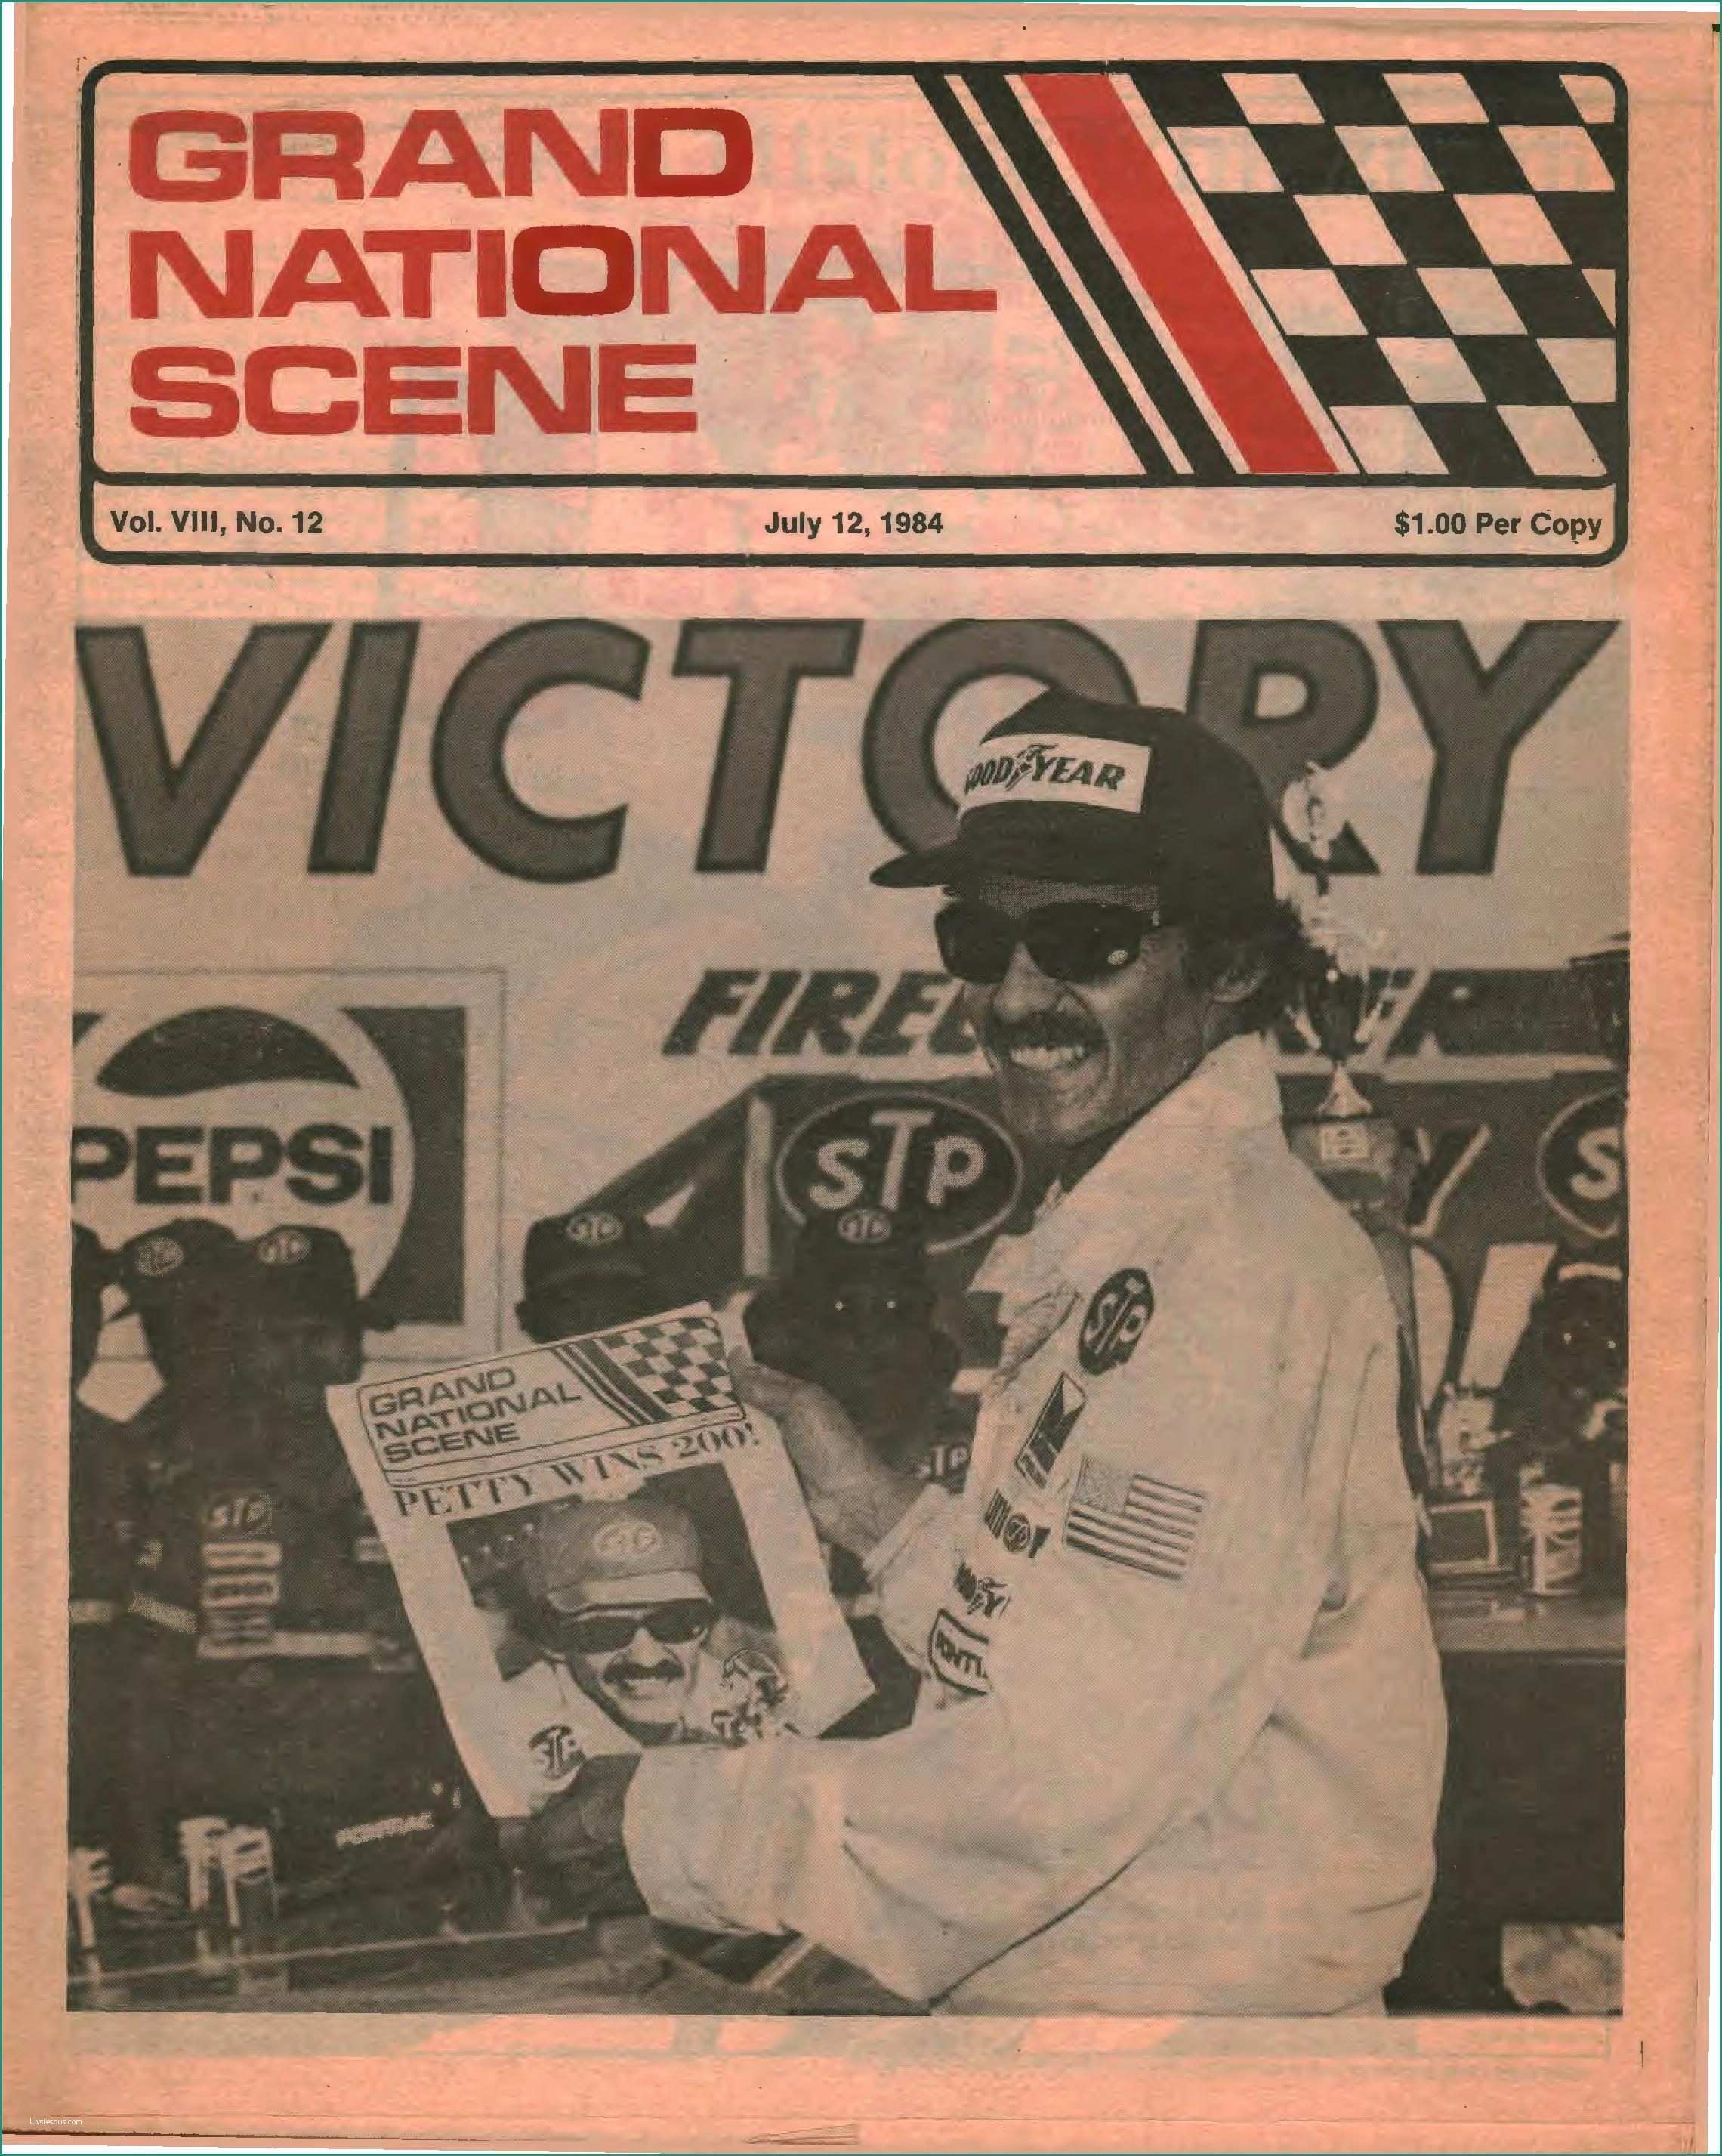 Orologi Leroy Merlin E 1984 7 12 Richard Petty Wins 200th at Daytona 500 Pages 1 40